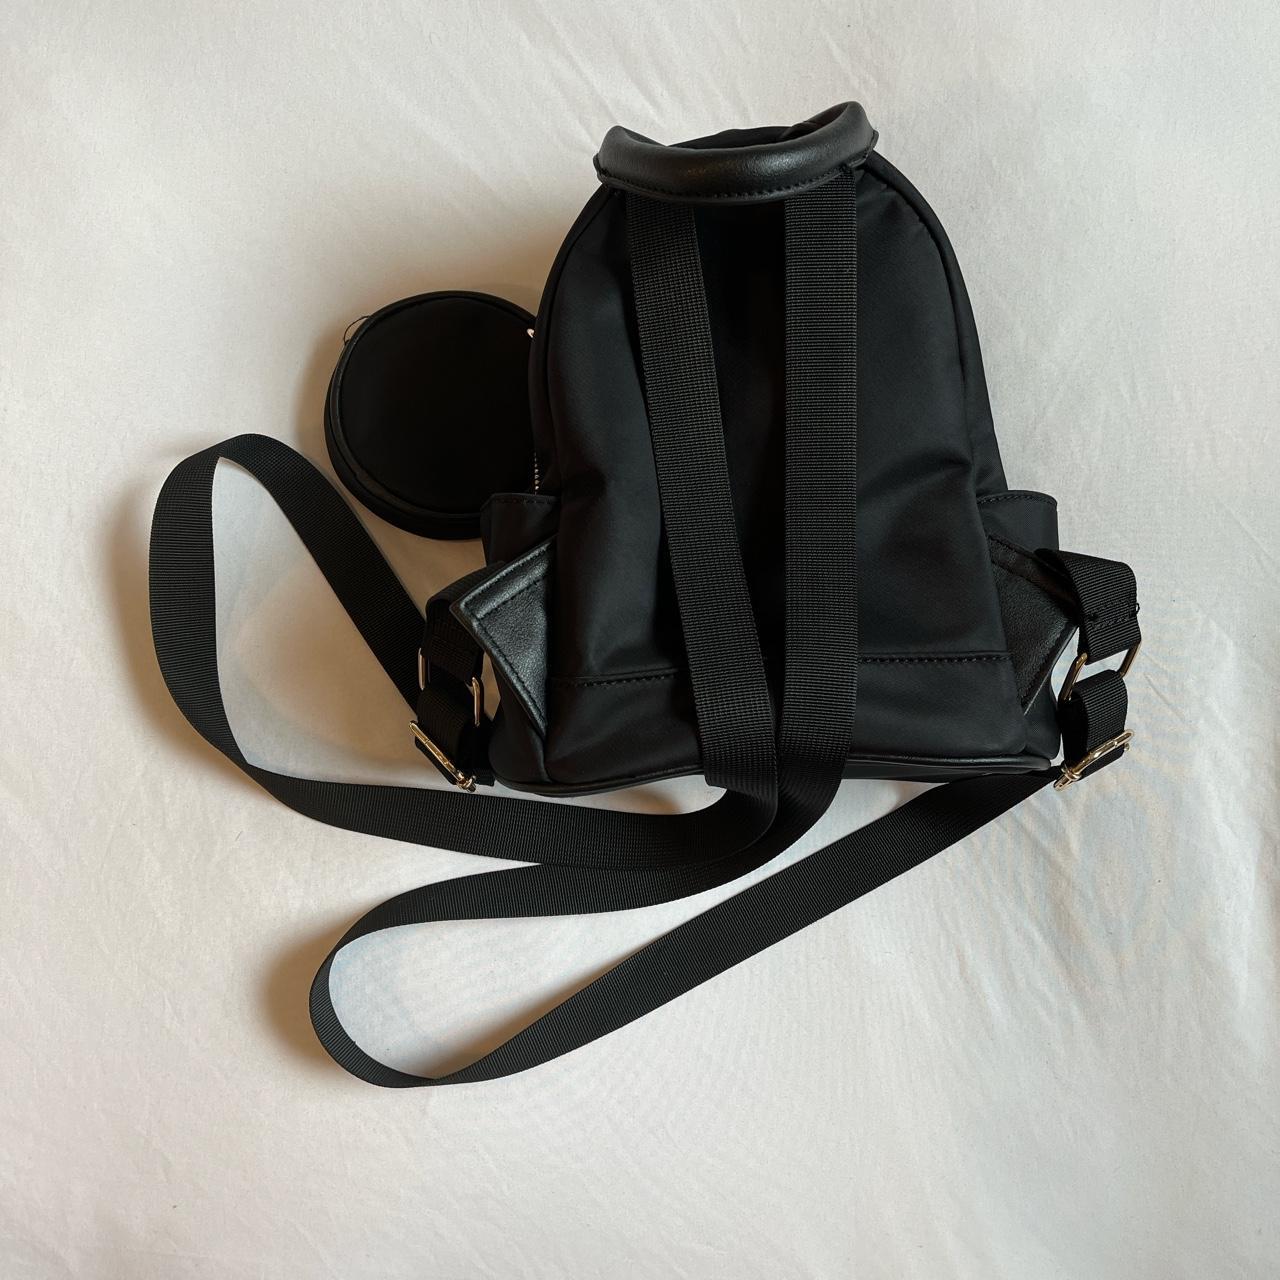 Mini backpack purse - Depop